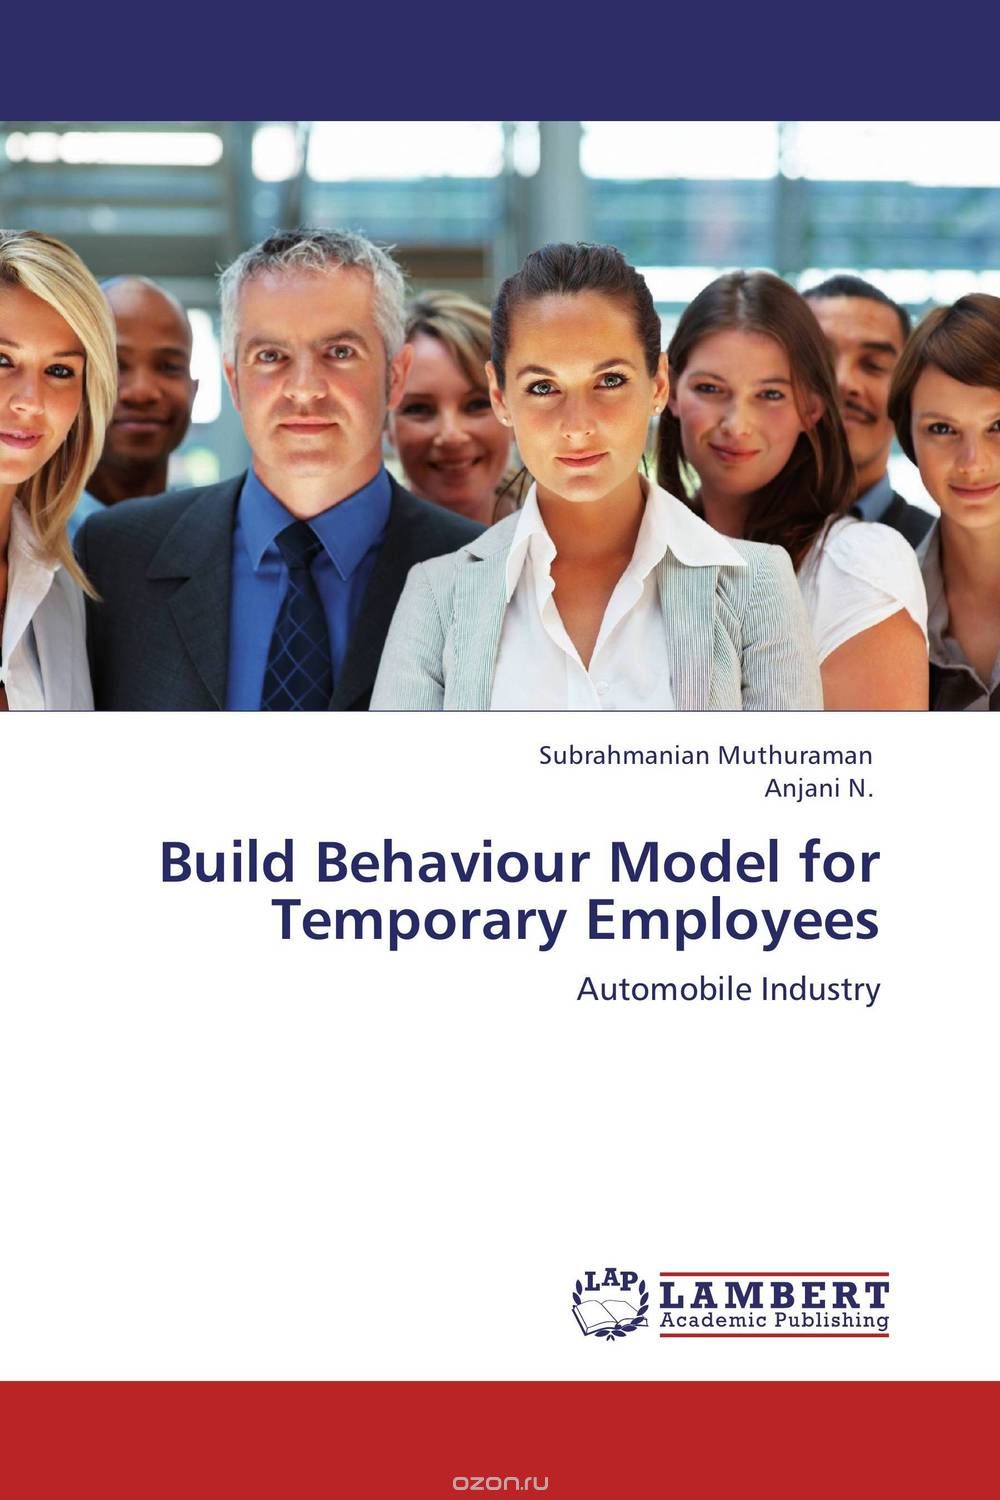 Скачать книгу "Build Behaviour Model for Temporary Employees"